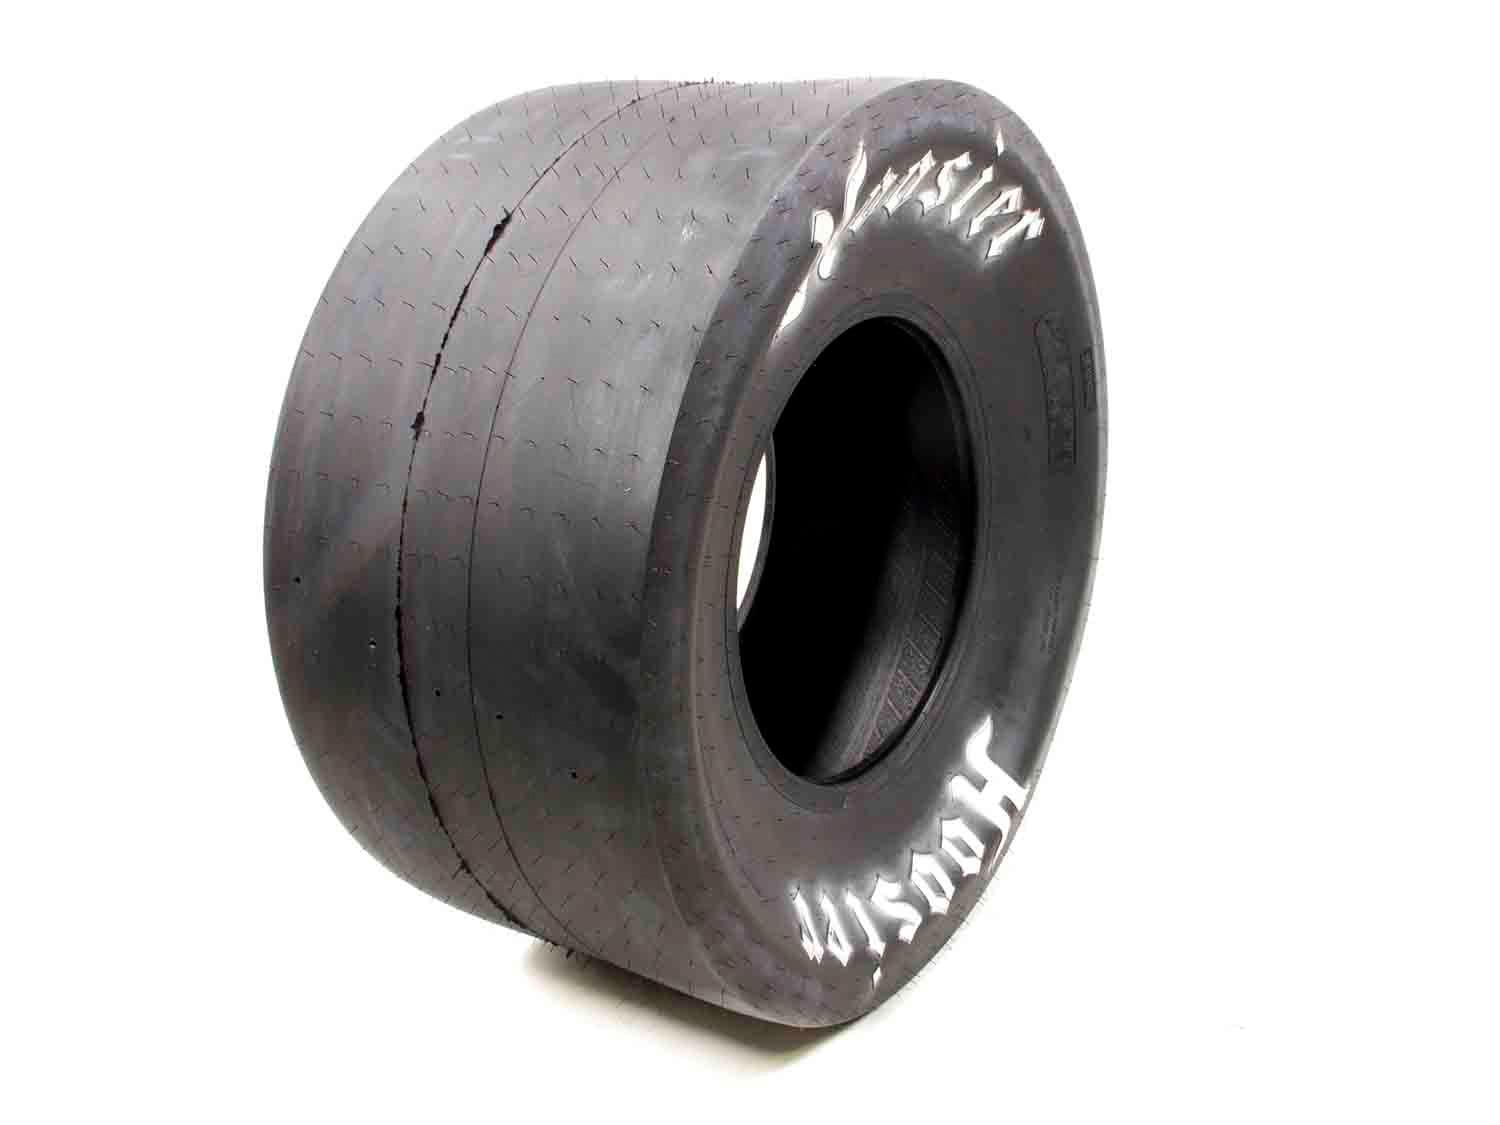 26.0/9-15 Drag Tire - Burlile Performance Products